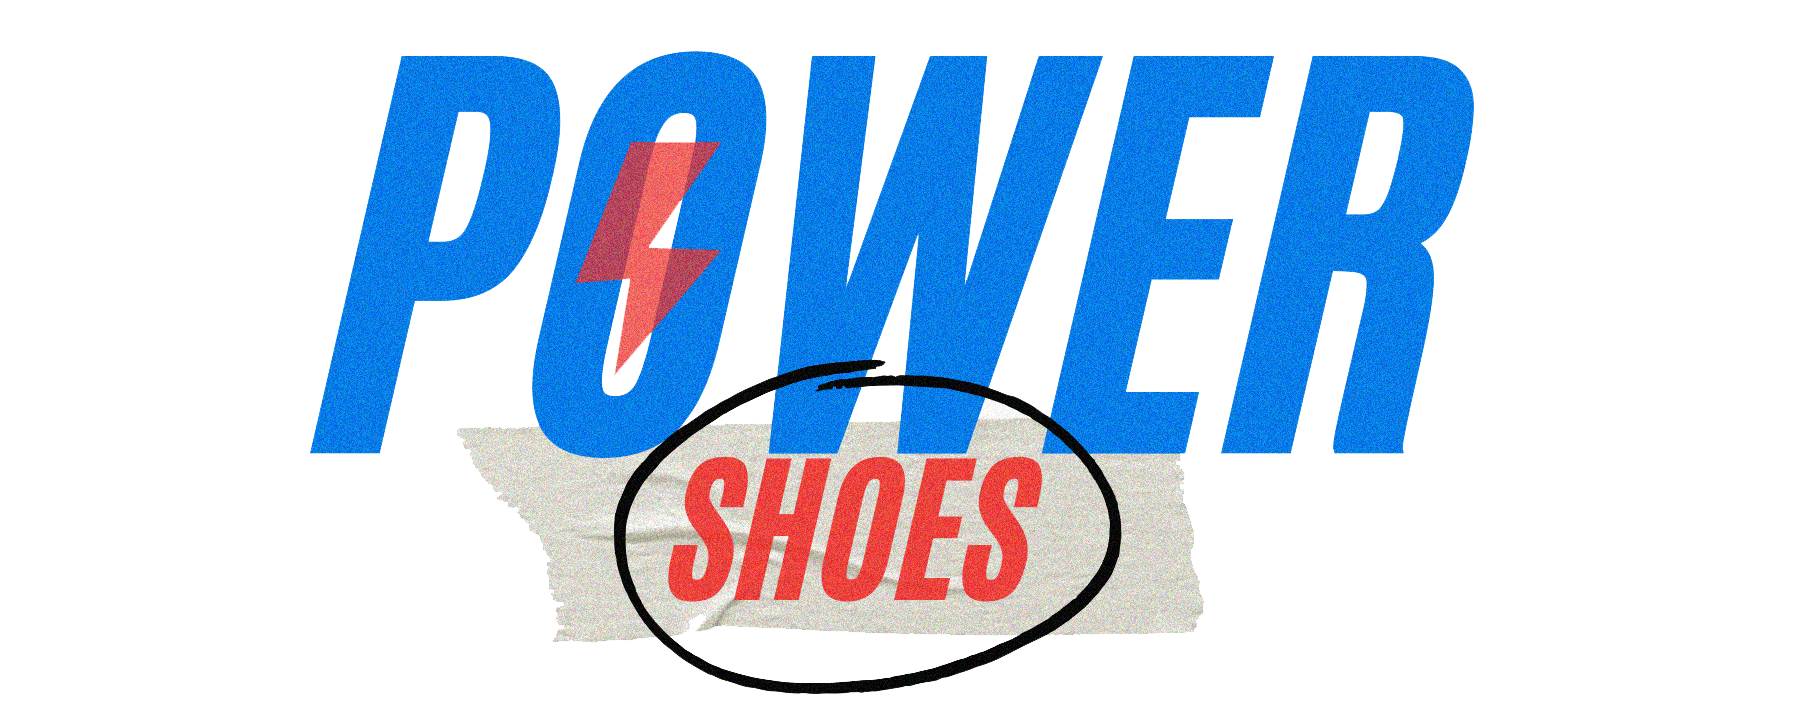 Tienda Online de Power shoes